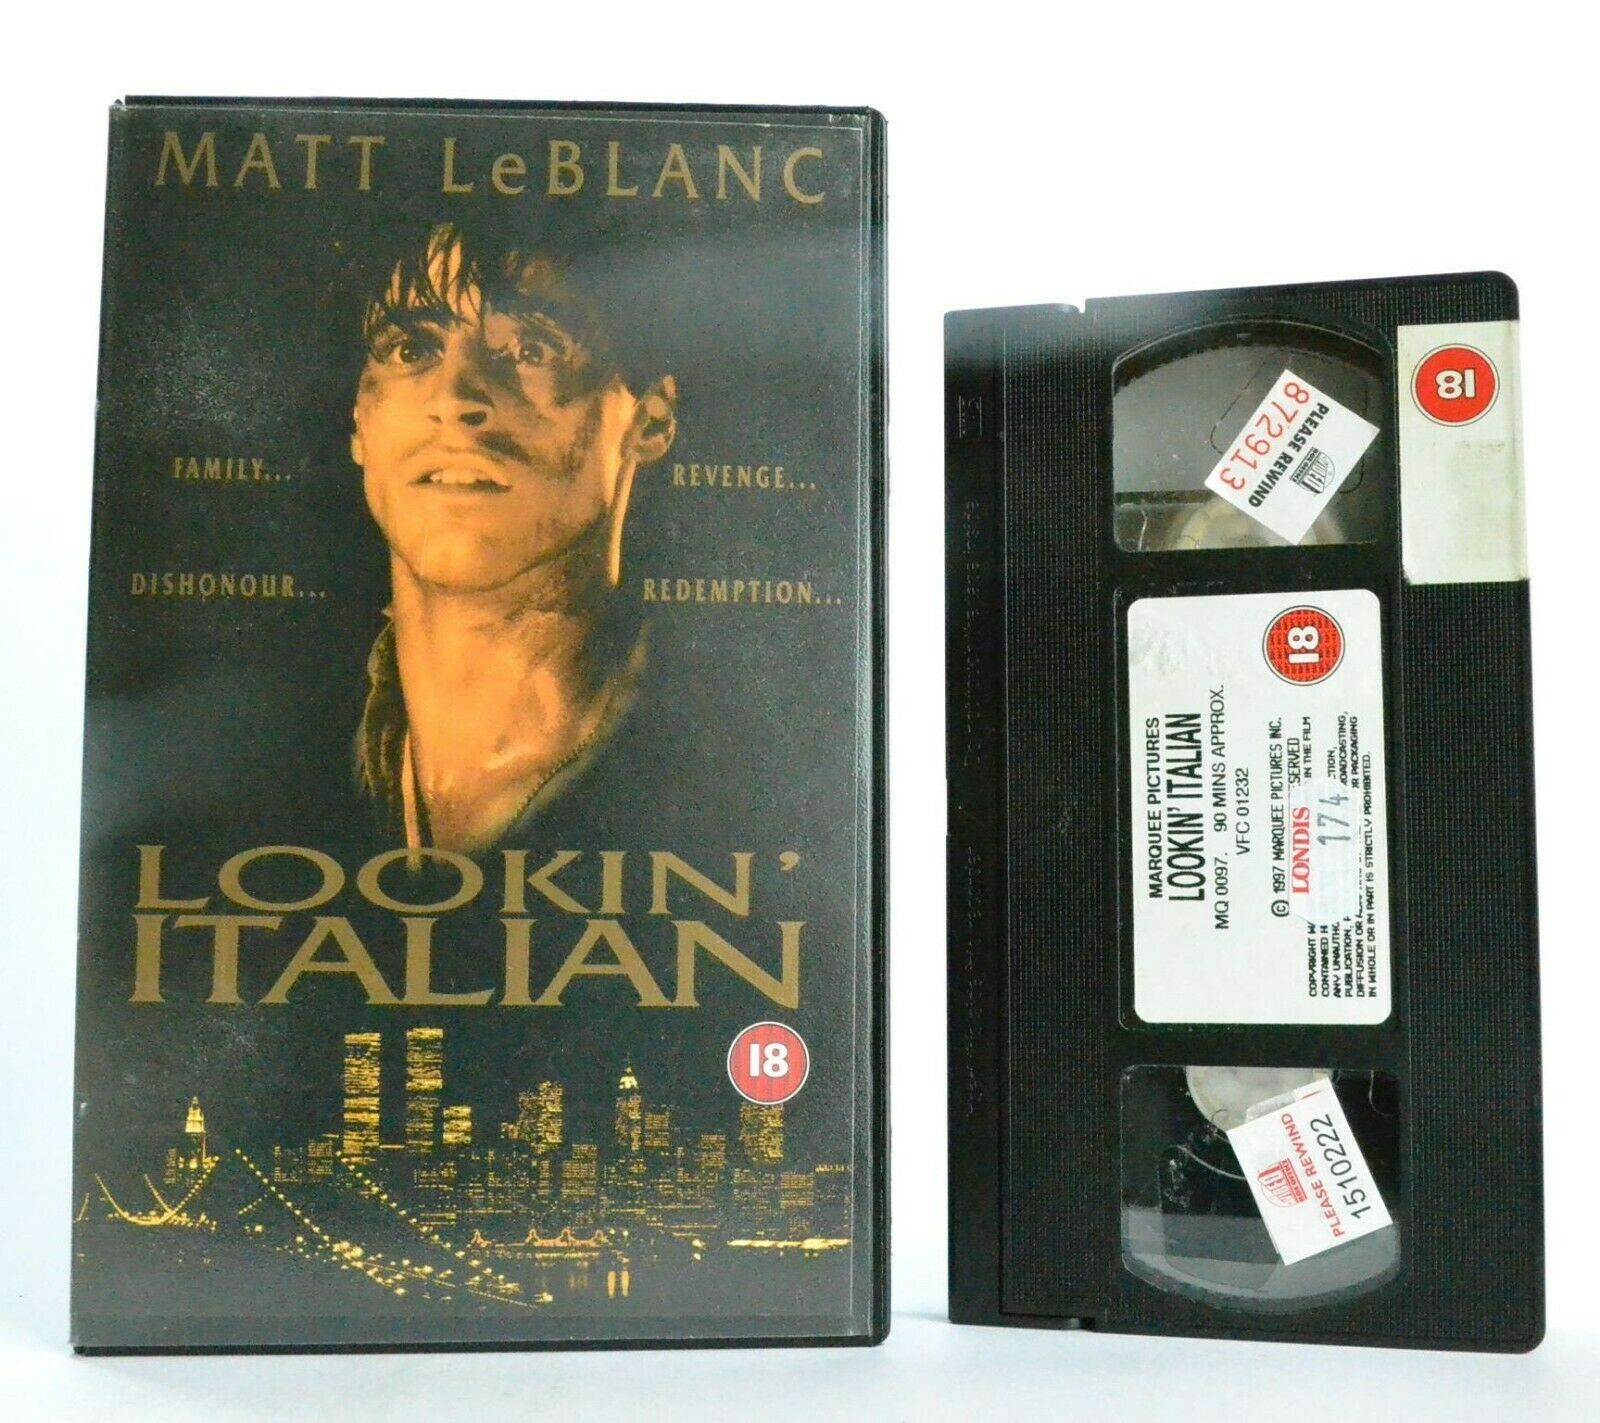 Lookin' Italian: (1994) Thriller - Seductive Lady-Killer - Matt LeBlanc - VHS-